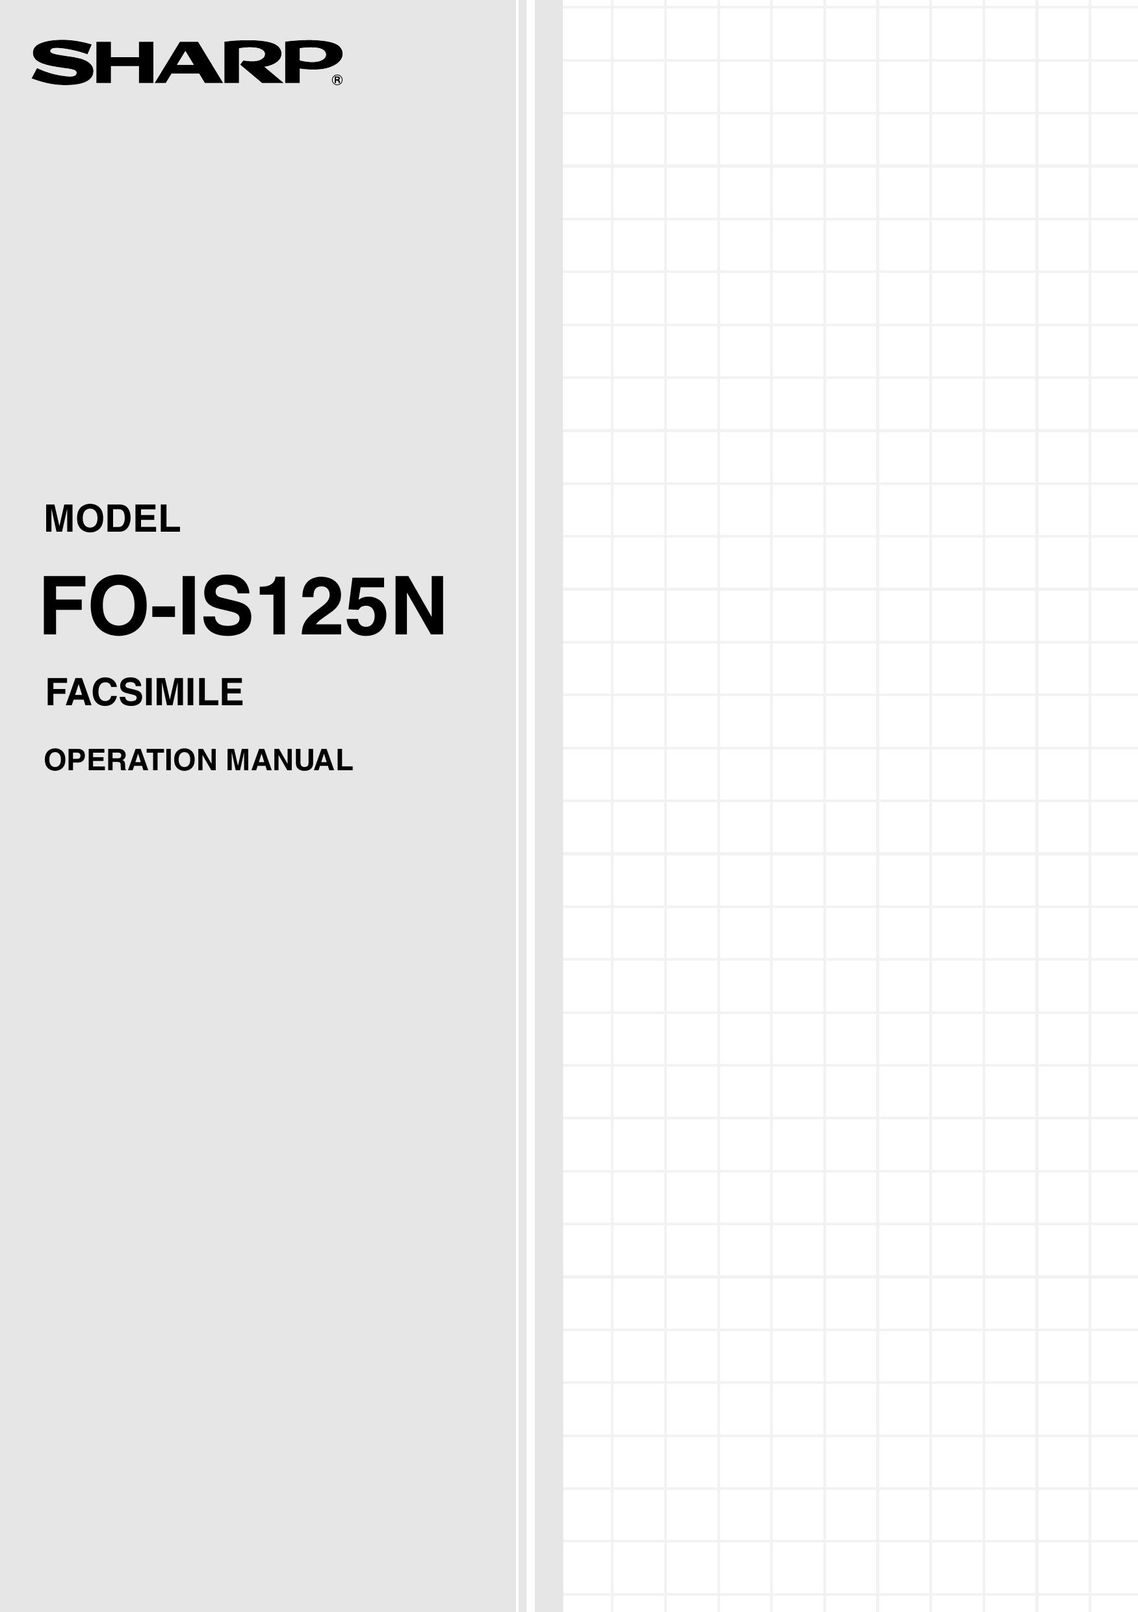 Sharp FO-IS125N Fax Machine User Manual